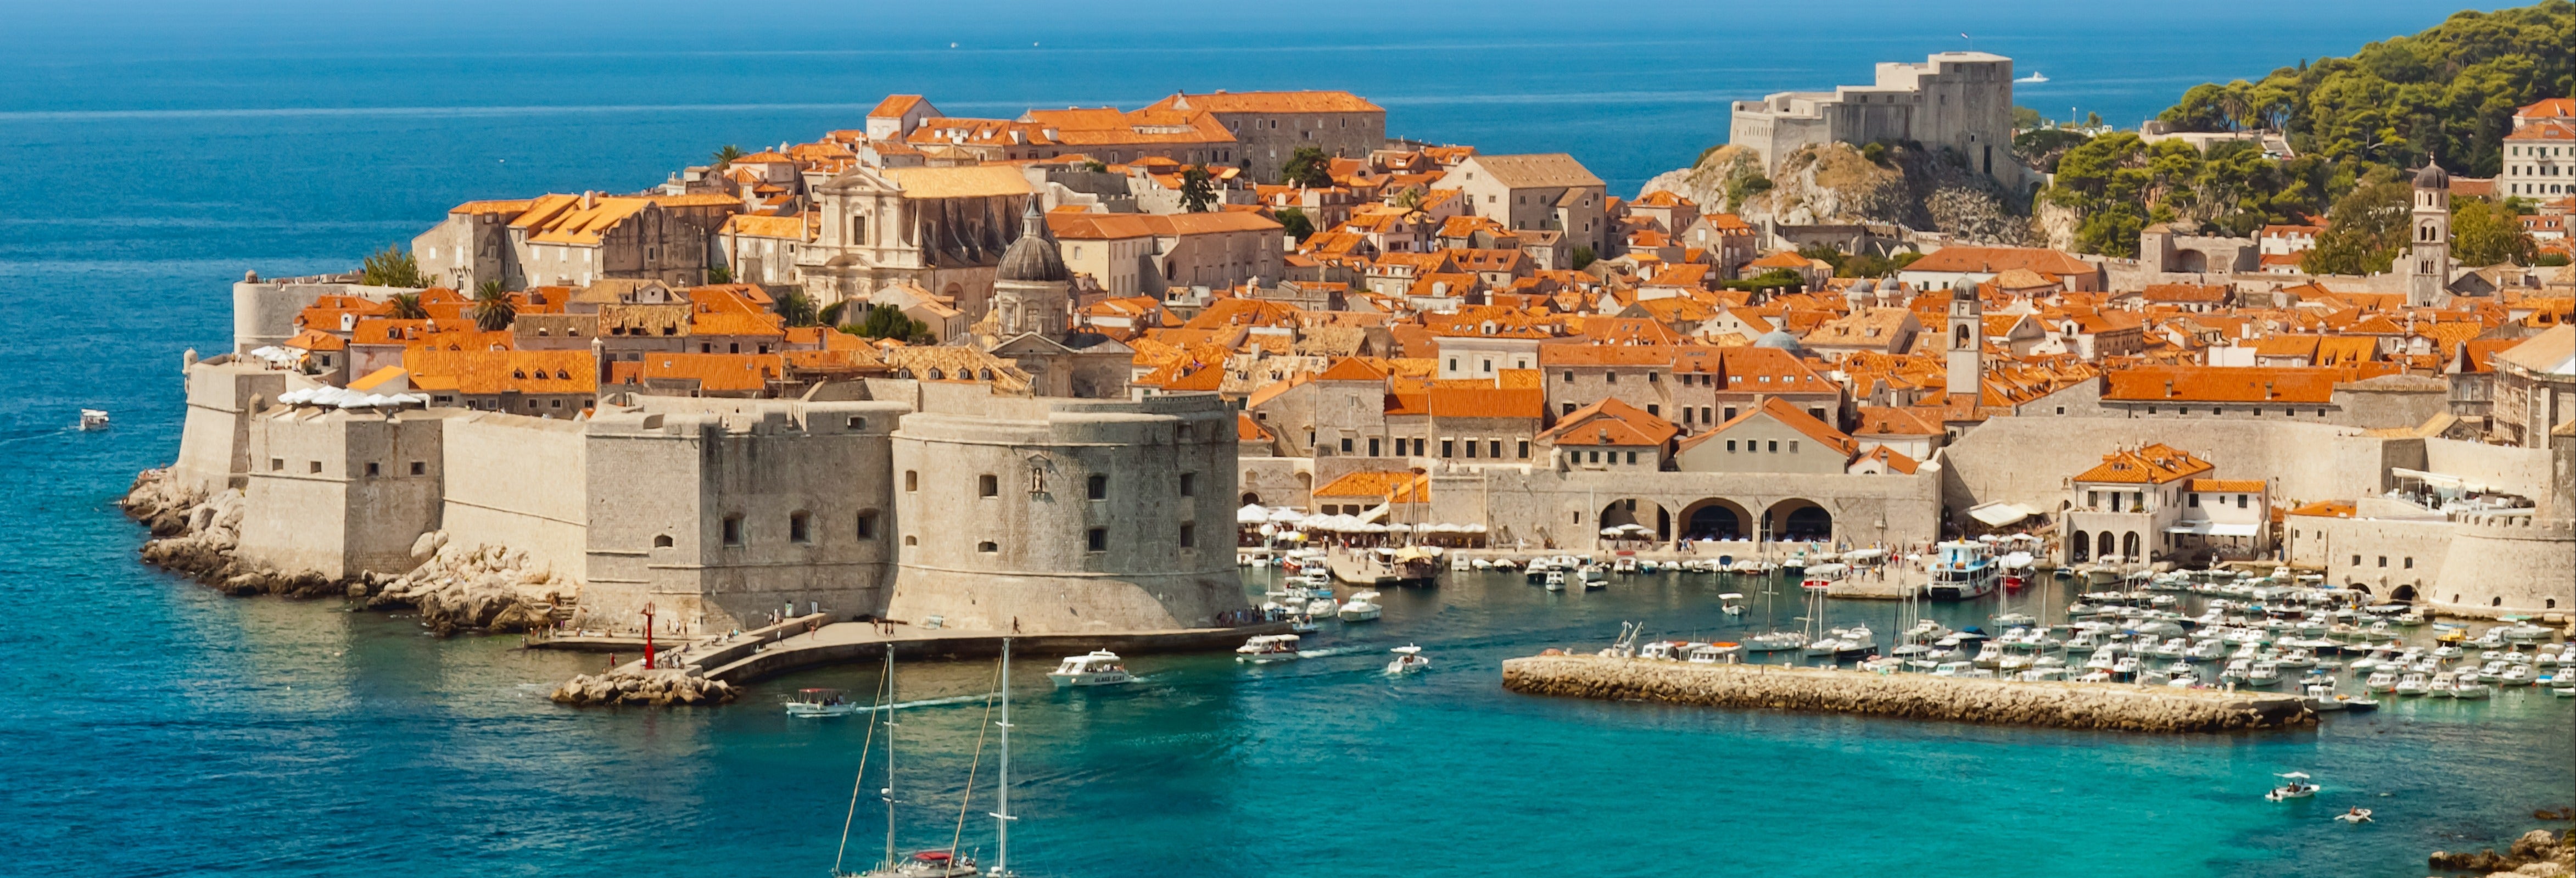 Visita guiada por Dubrovnik